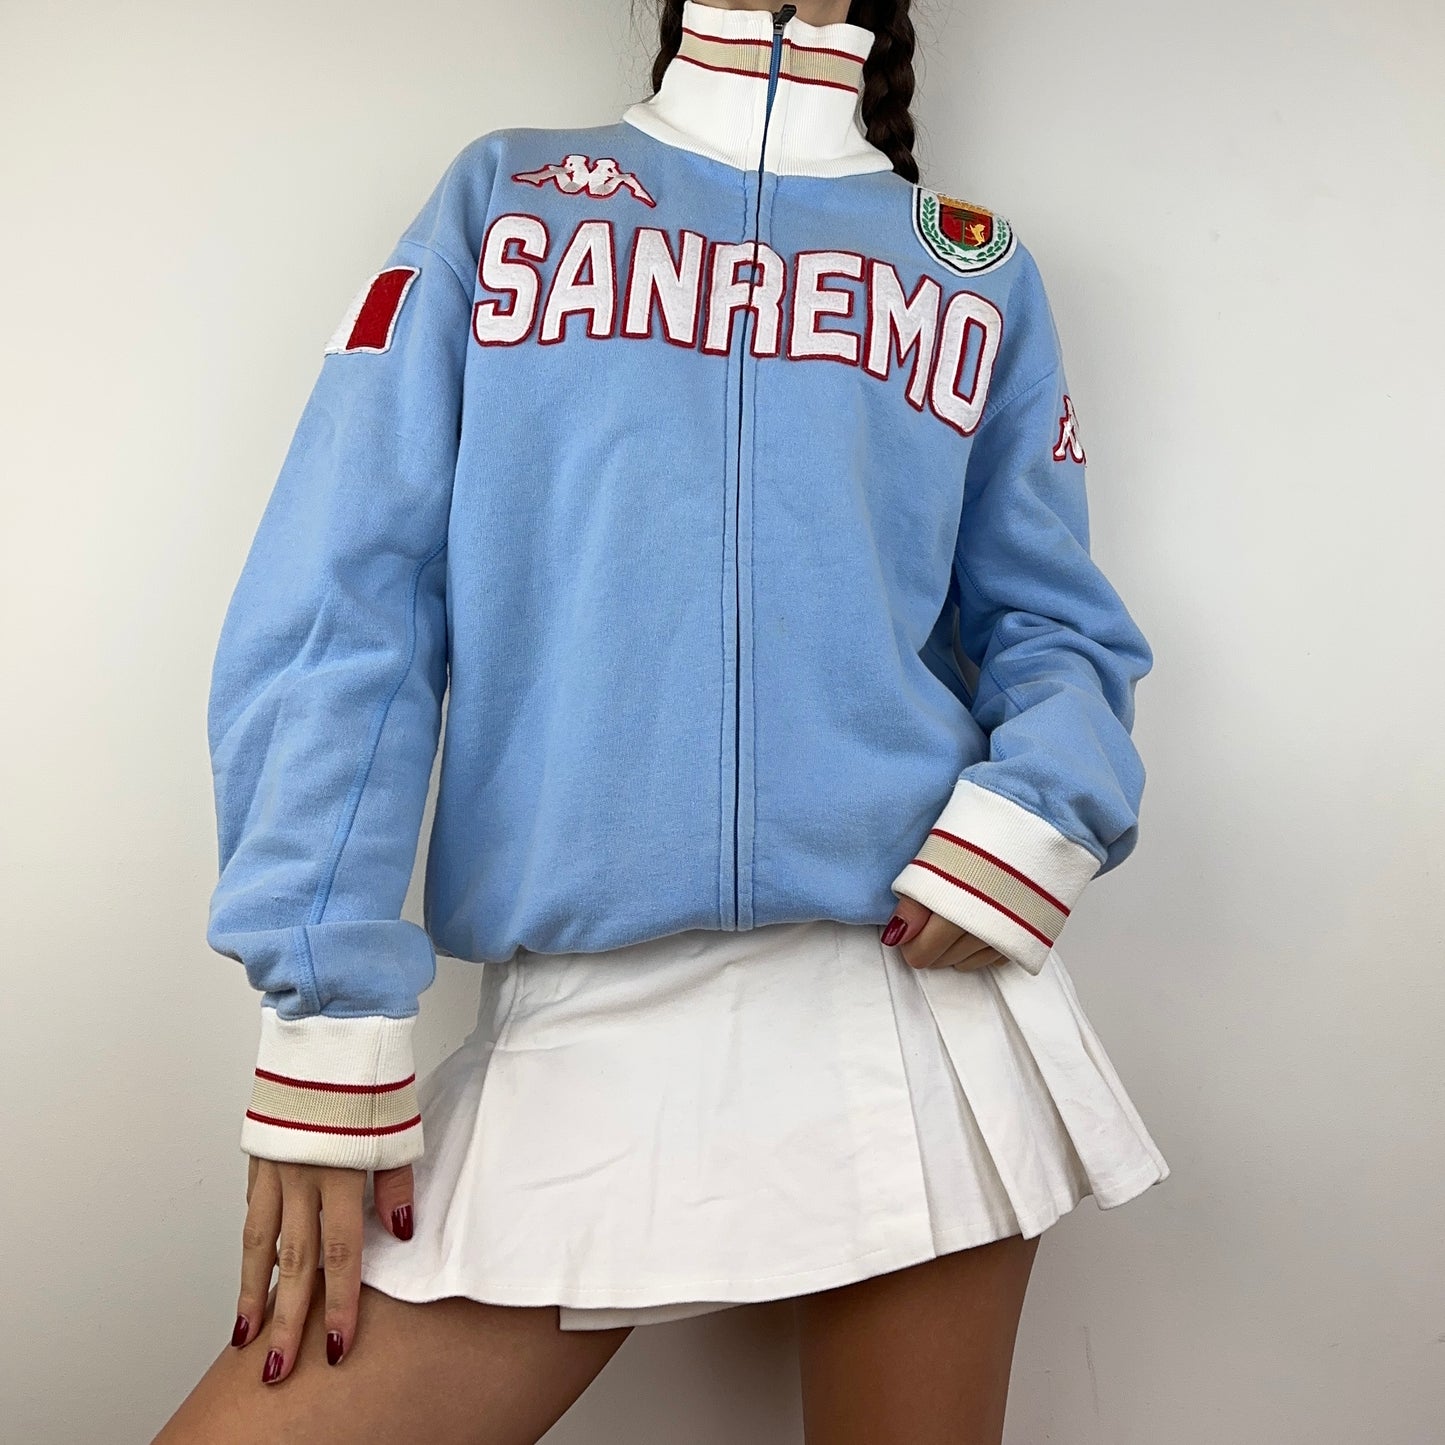 Kappa Sanremo Jacket